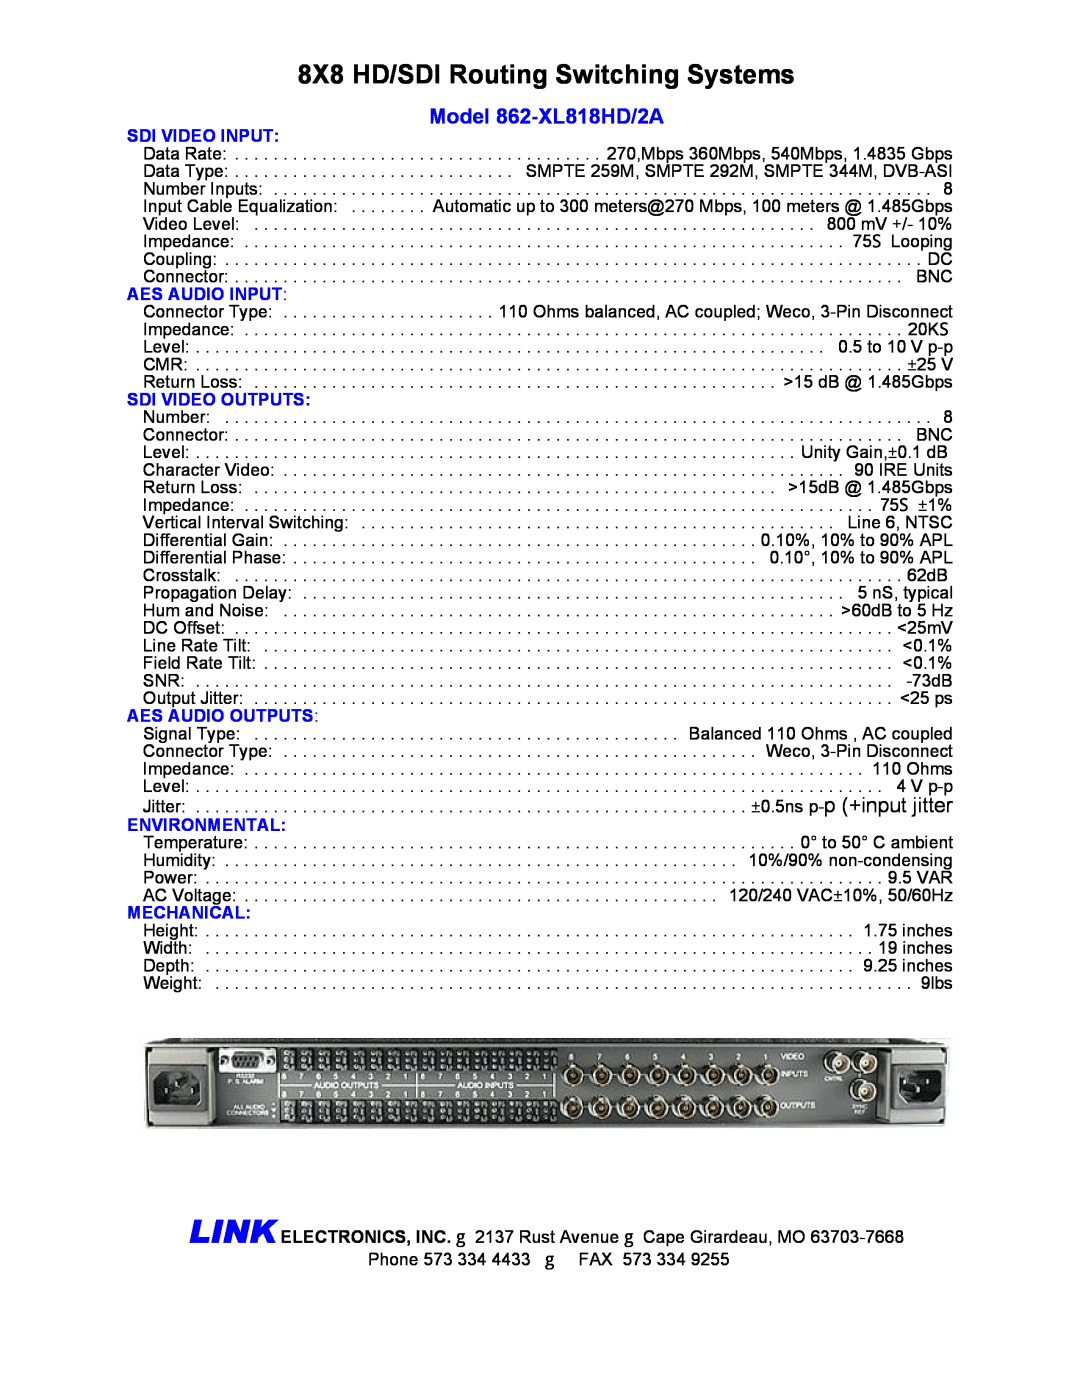 Link electronic 862-XL818HD/2A manual Sdi Video Input, Sdi Video Outputs, Aes Audio Outputs, Environmental, Mechanical 